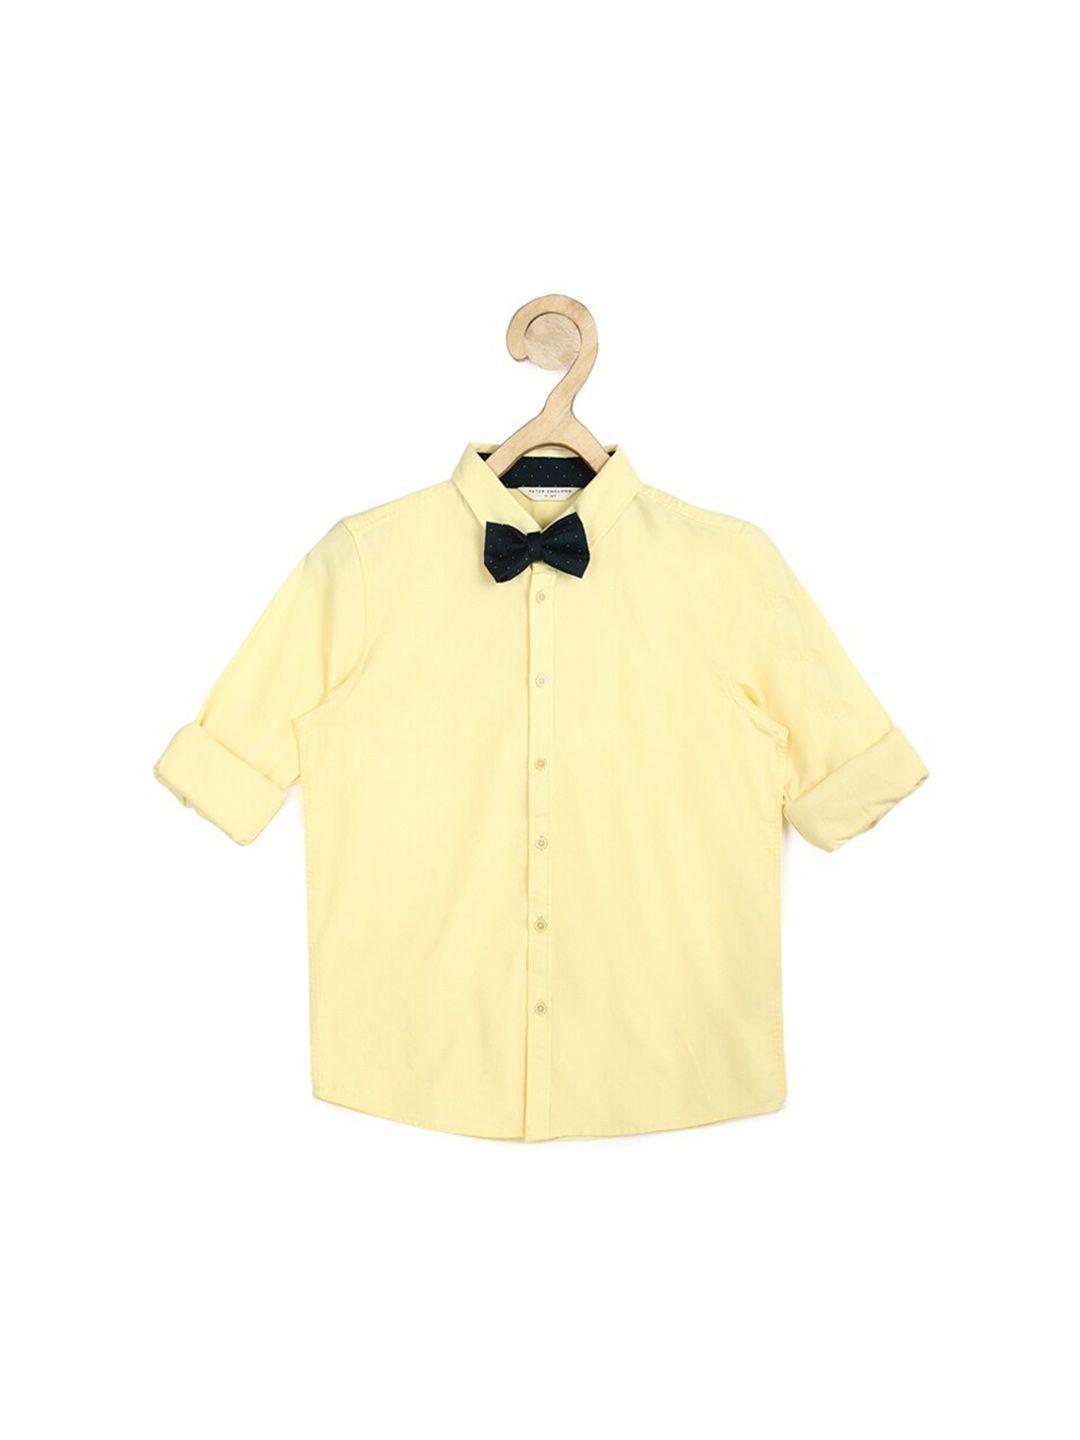 peter england boys yellow cotton shirt